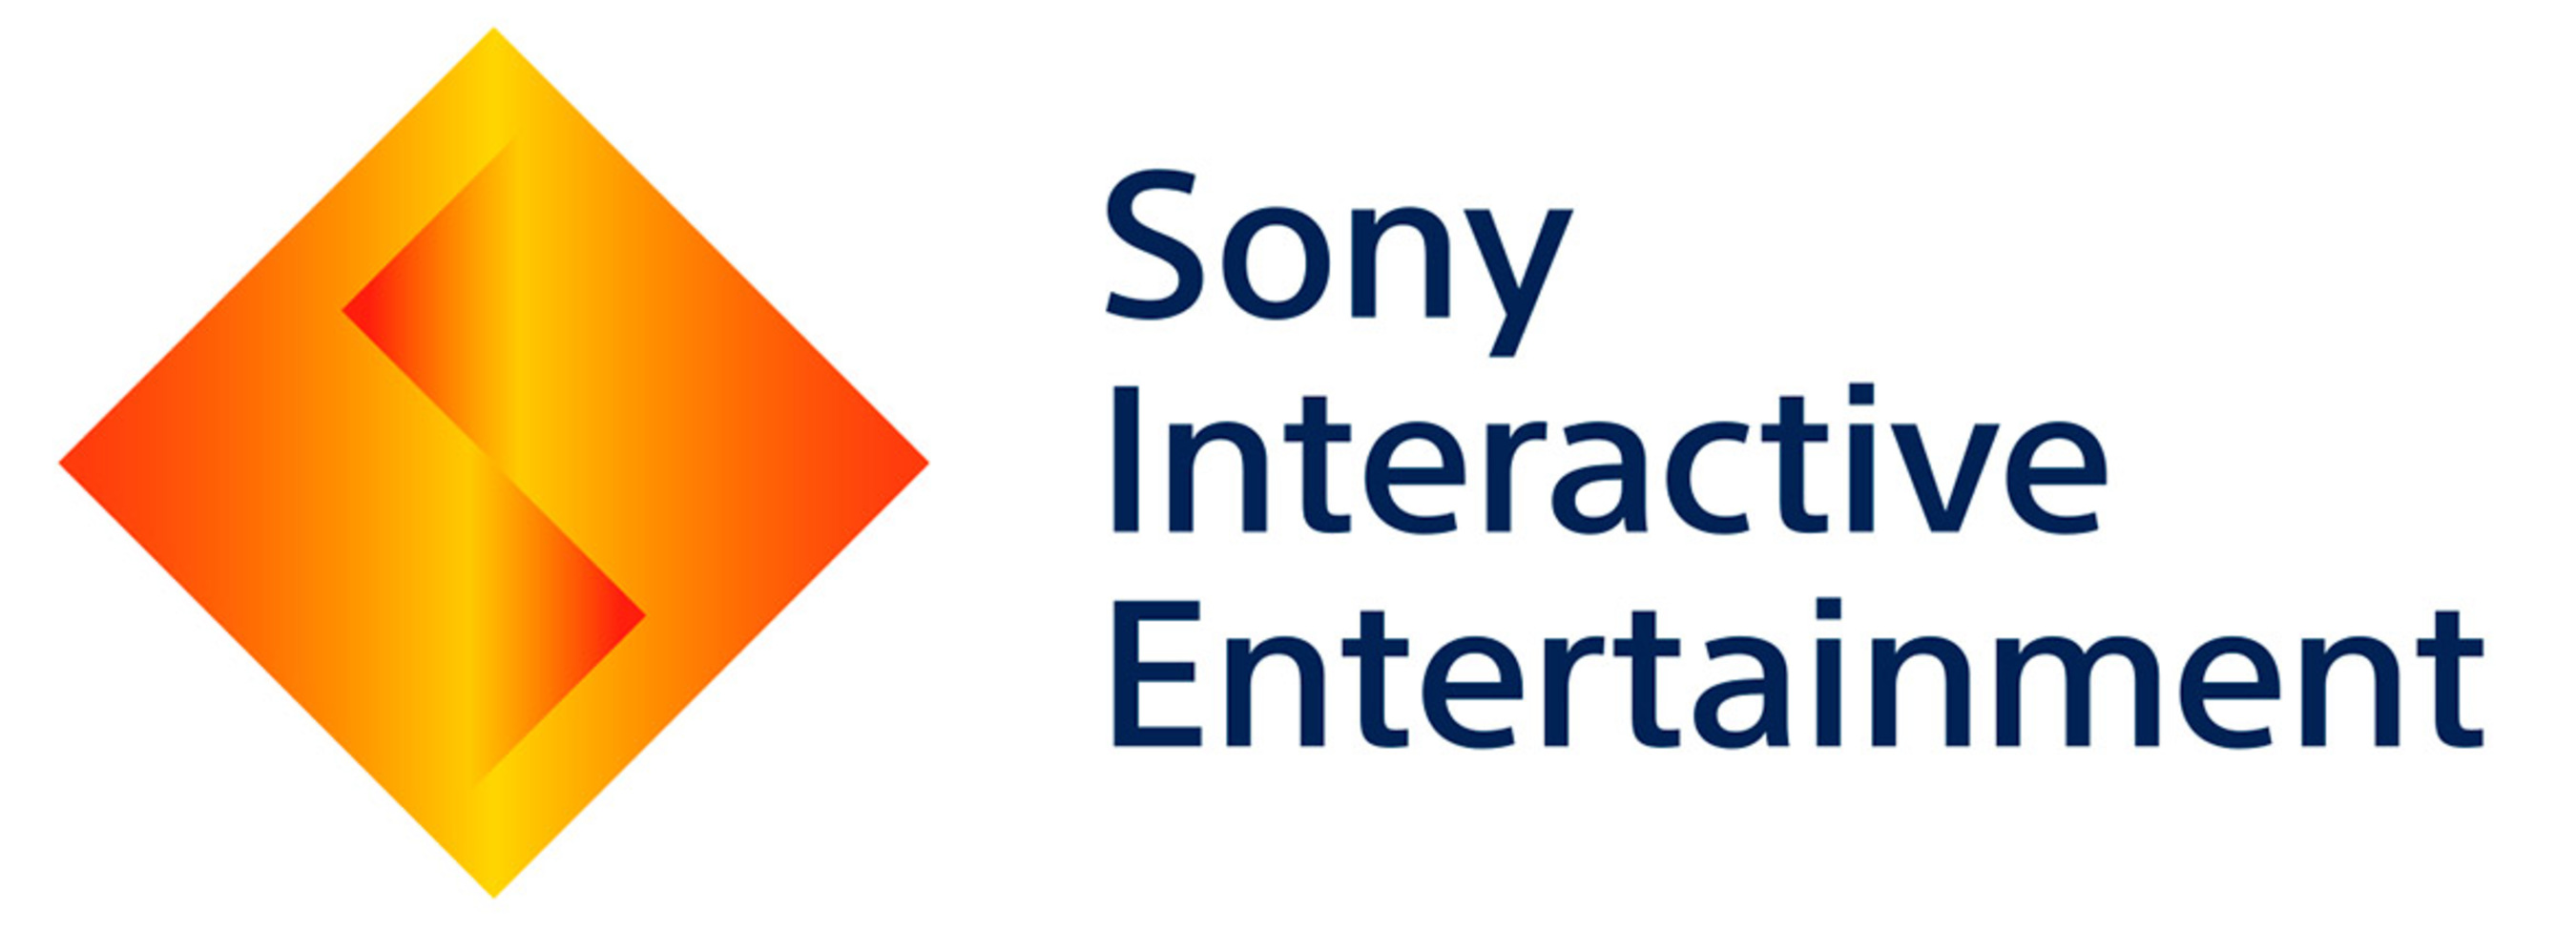 Sony Computer Entertainment corporate logo